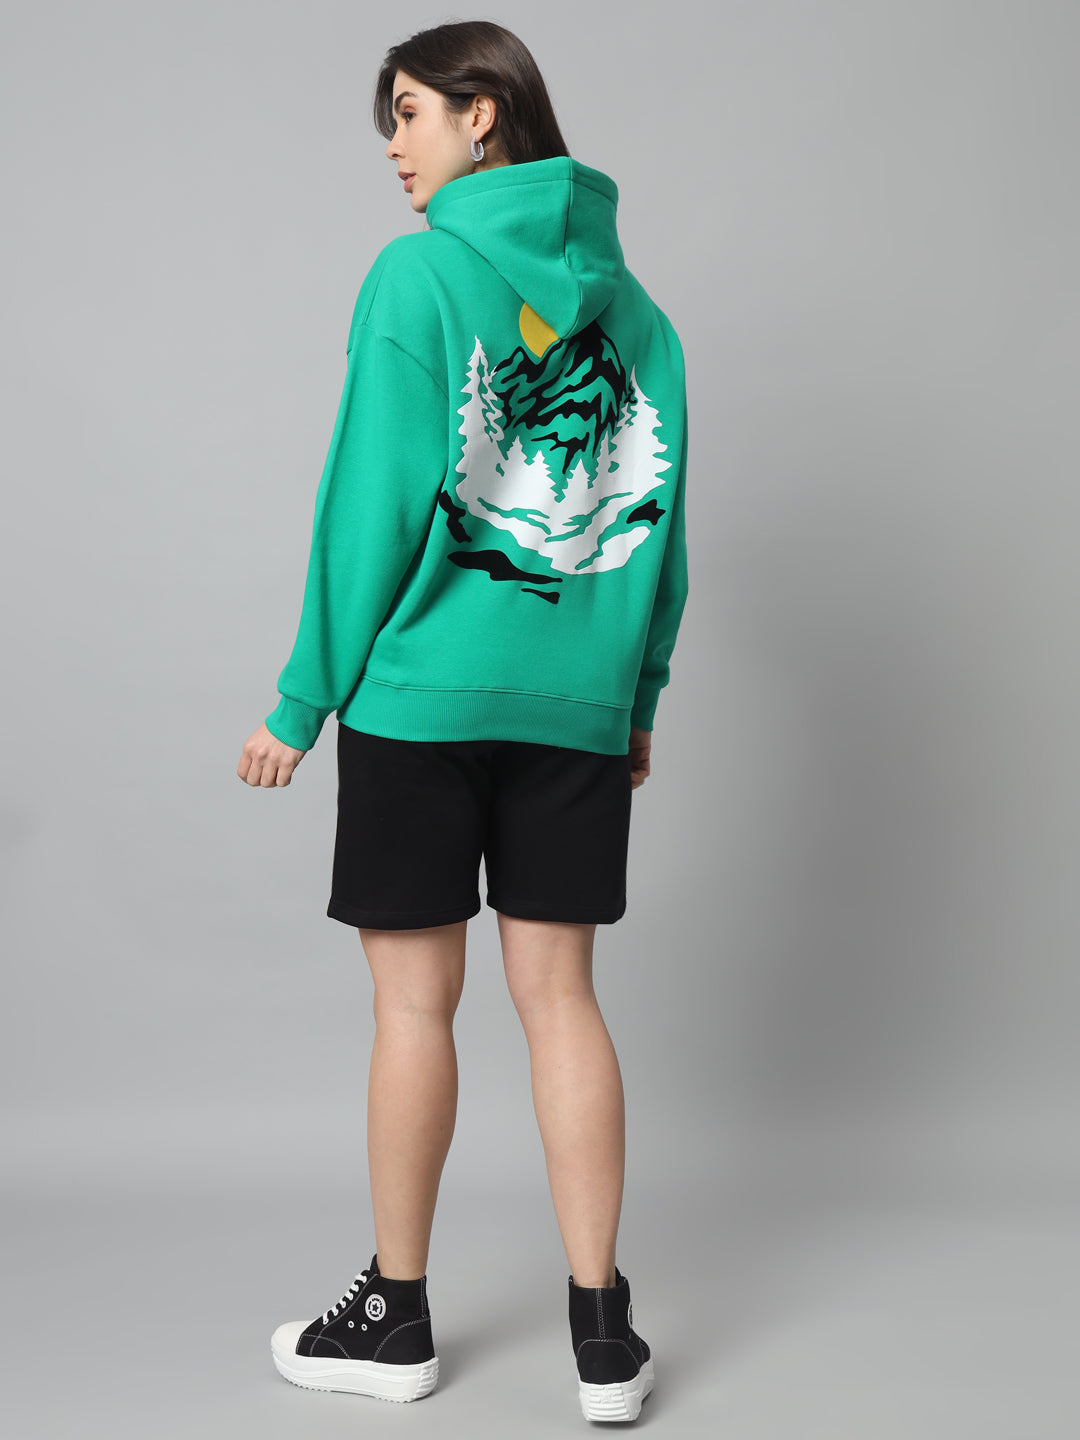 Griffel Women Oversized Neon Green MOUNTAIN Print 100% Cotton Fleece Hoodie and Short Full set Tracksuit - griffel